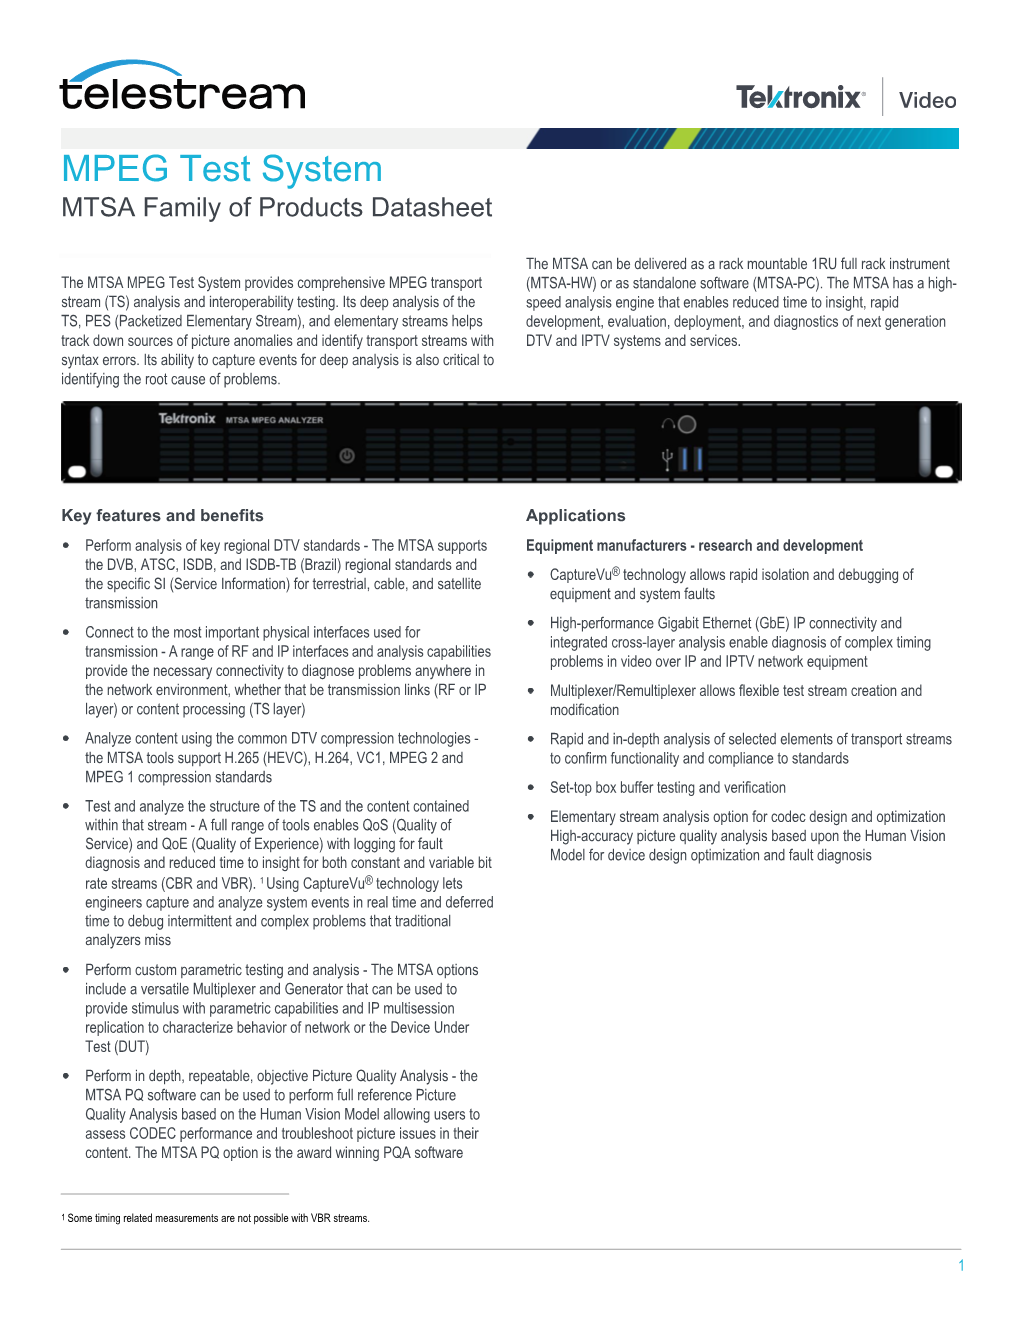 MPEG Test System MTSA Family of Products Datasheet